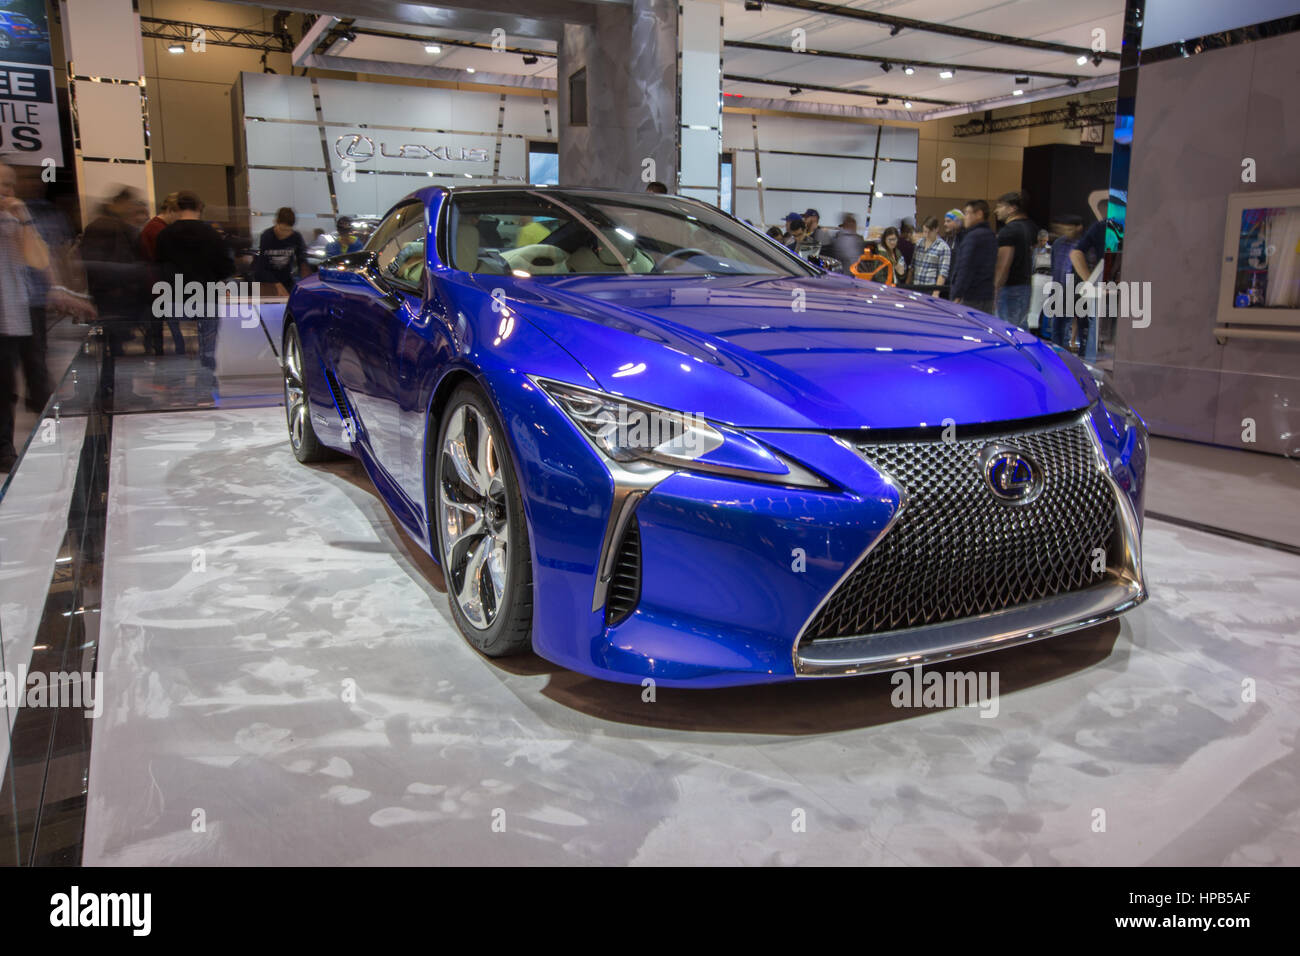 New blue Lexus concept LF-FC on the car show floor Stock Photo